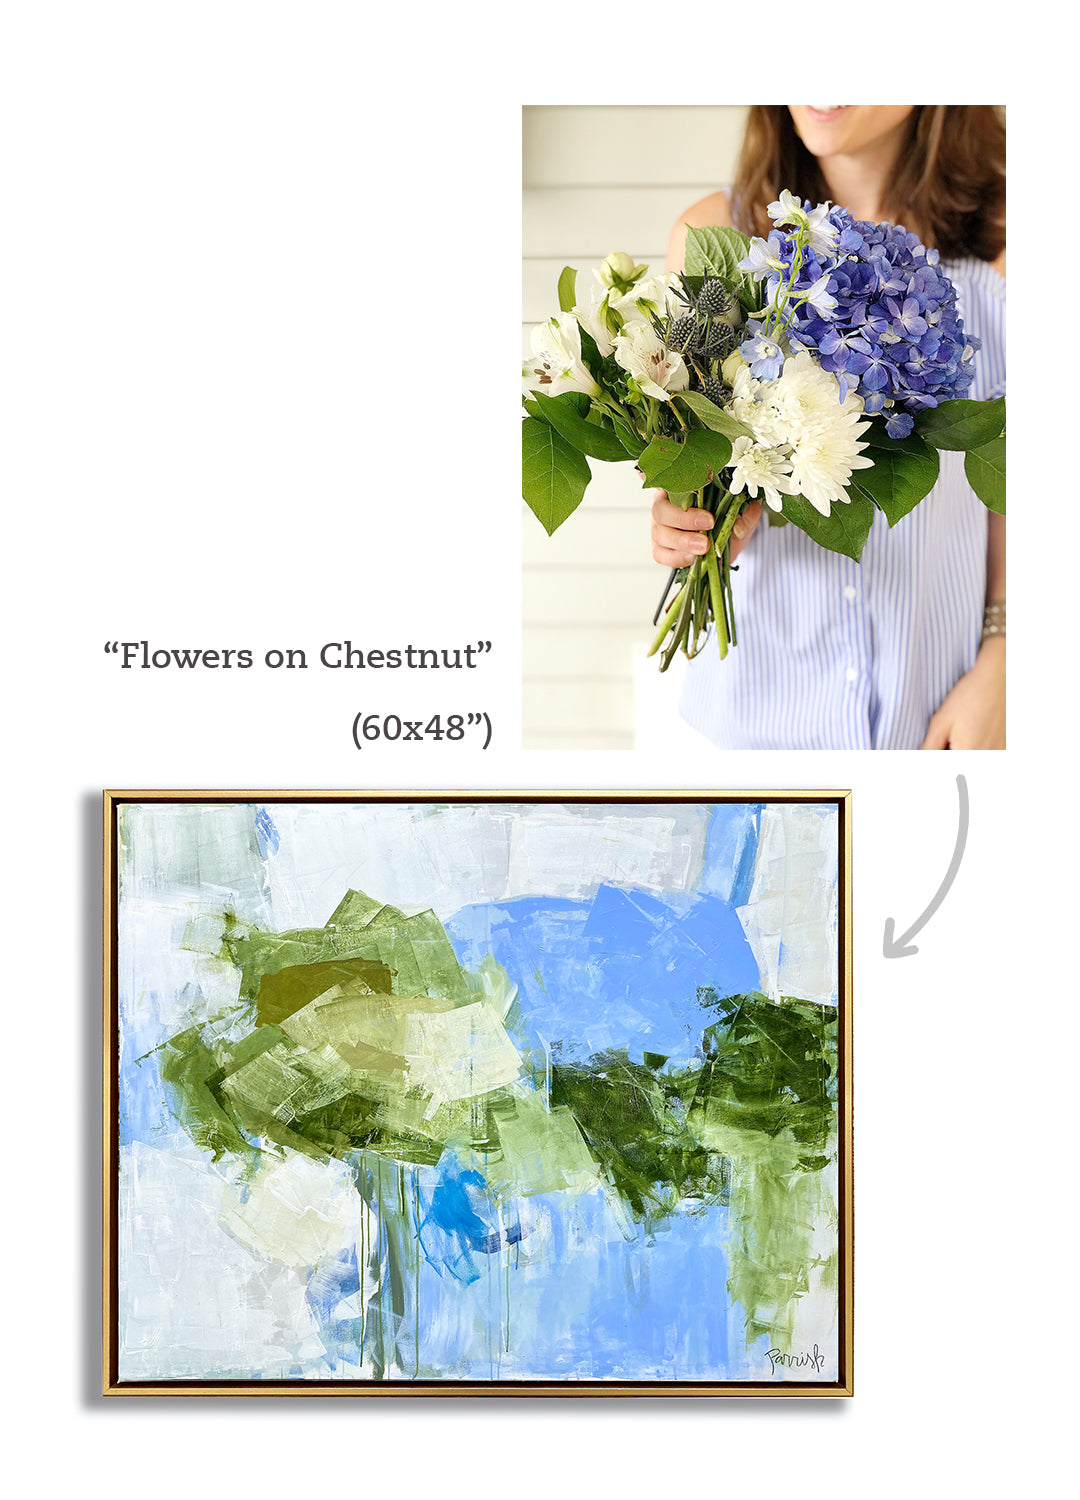 Flowers on Chestnut - 62x50"